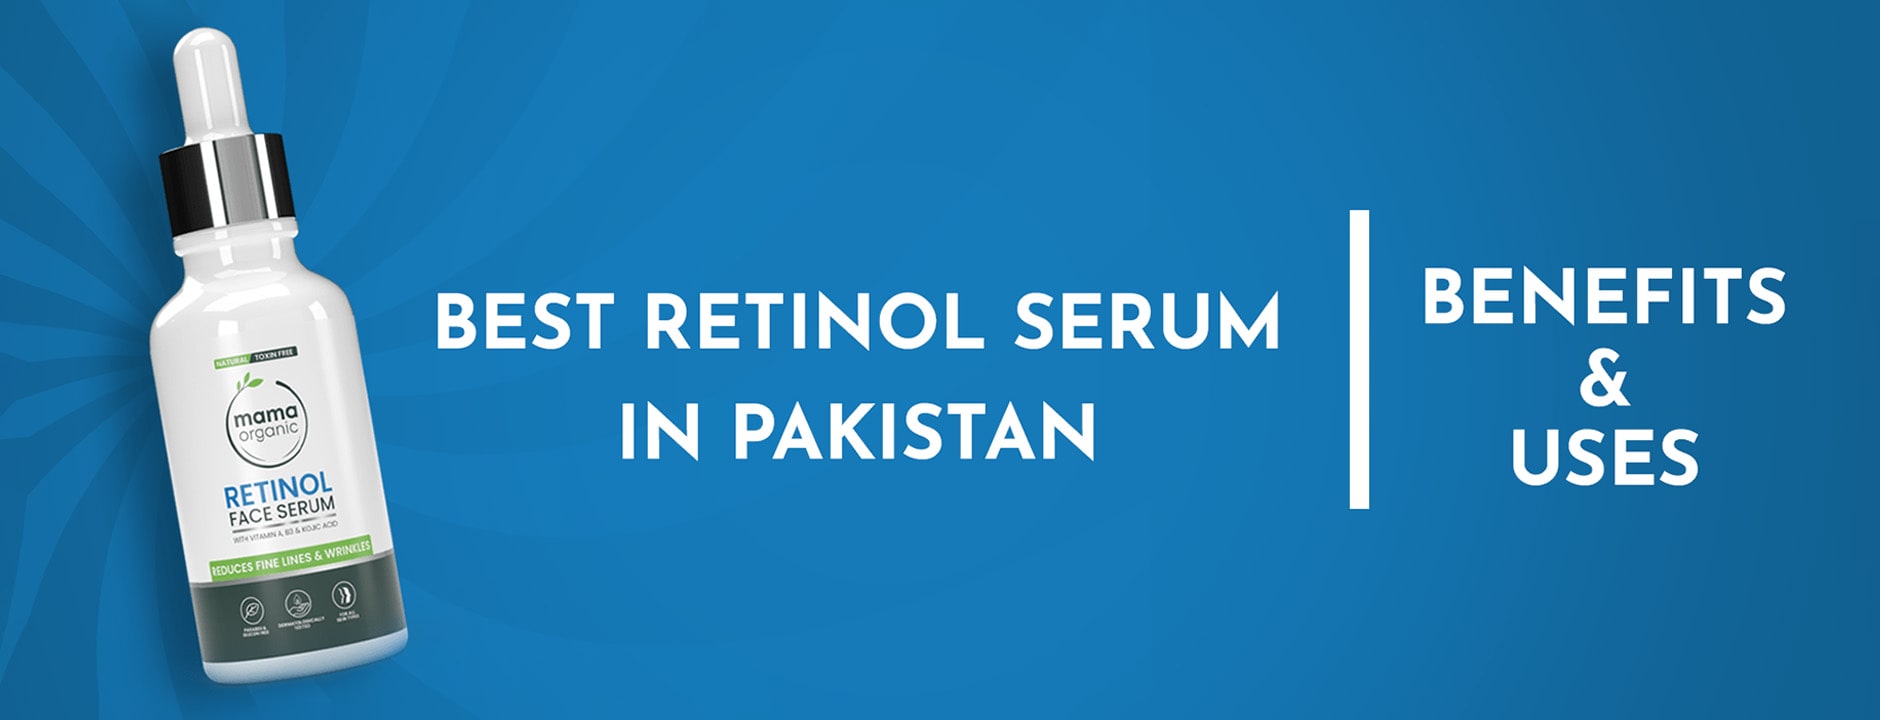 Best Retinol Serum in Pakistan: Benefits and Uses